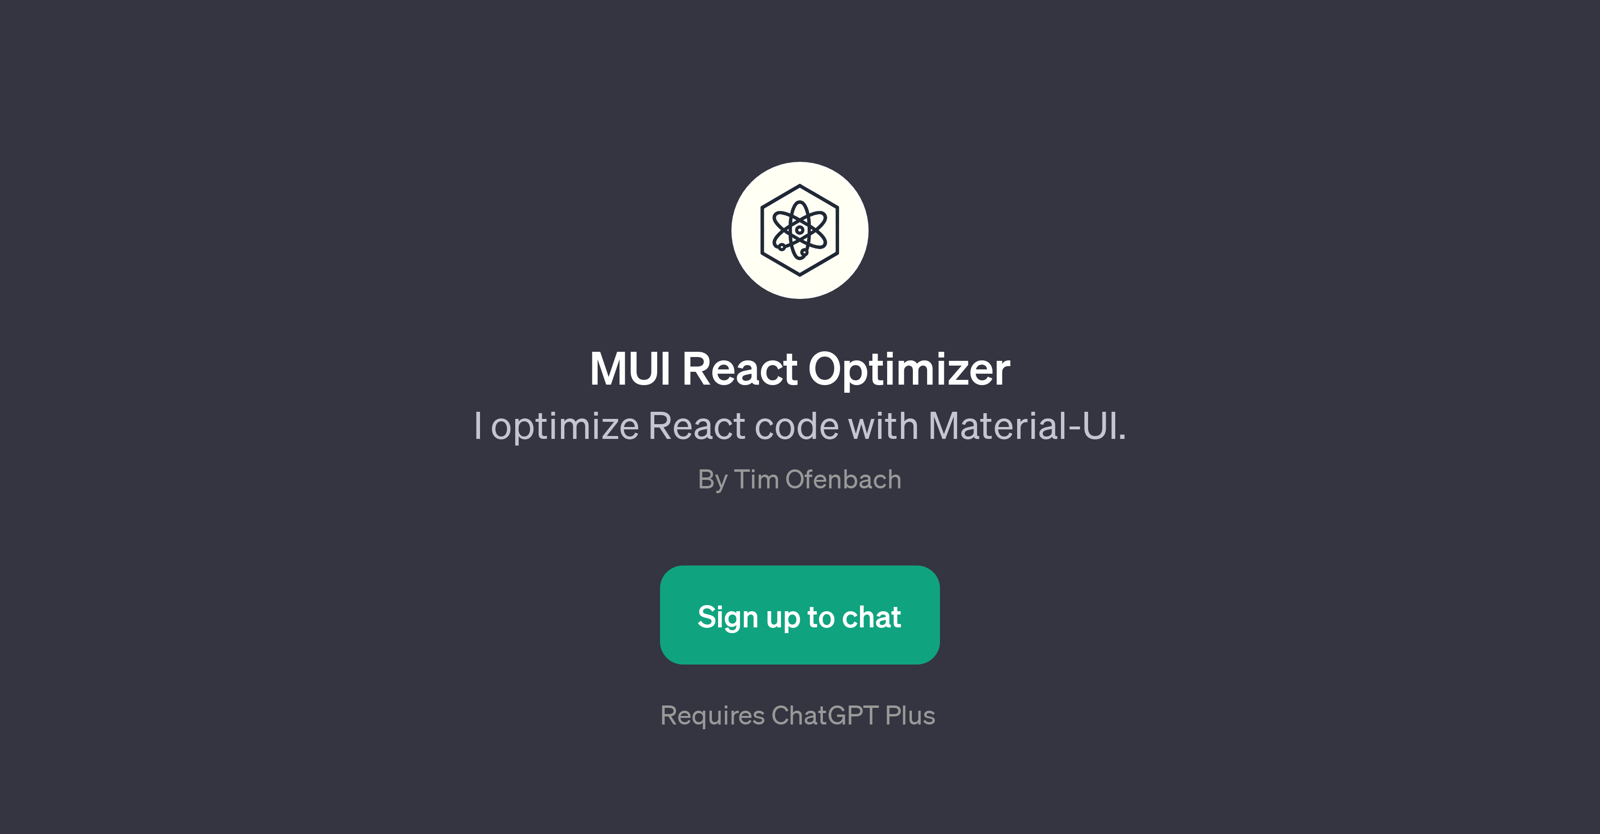 MUI React Optimizer website